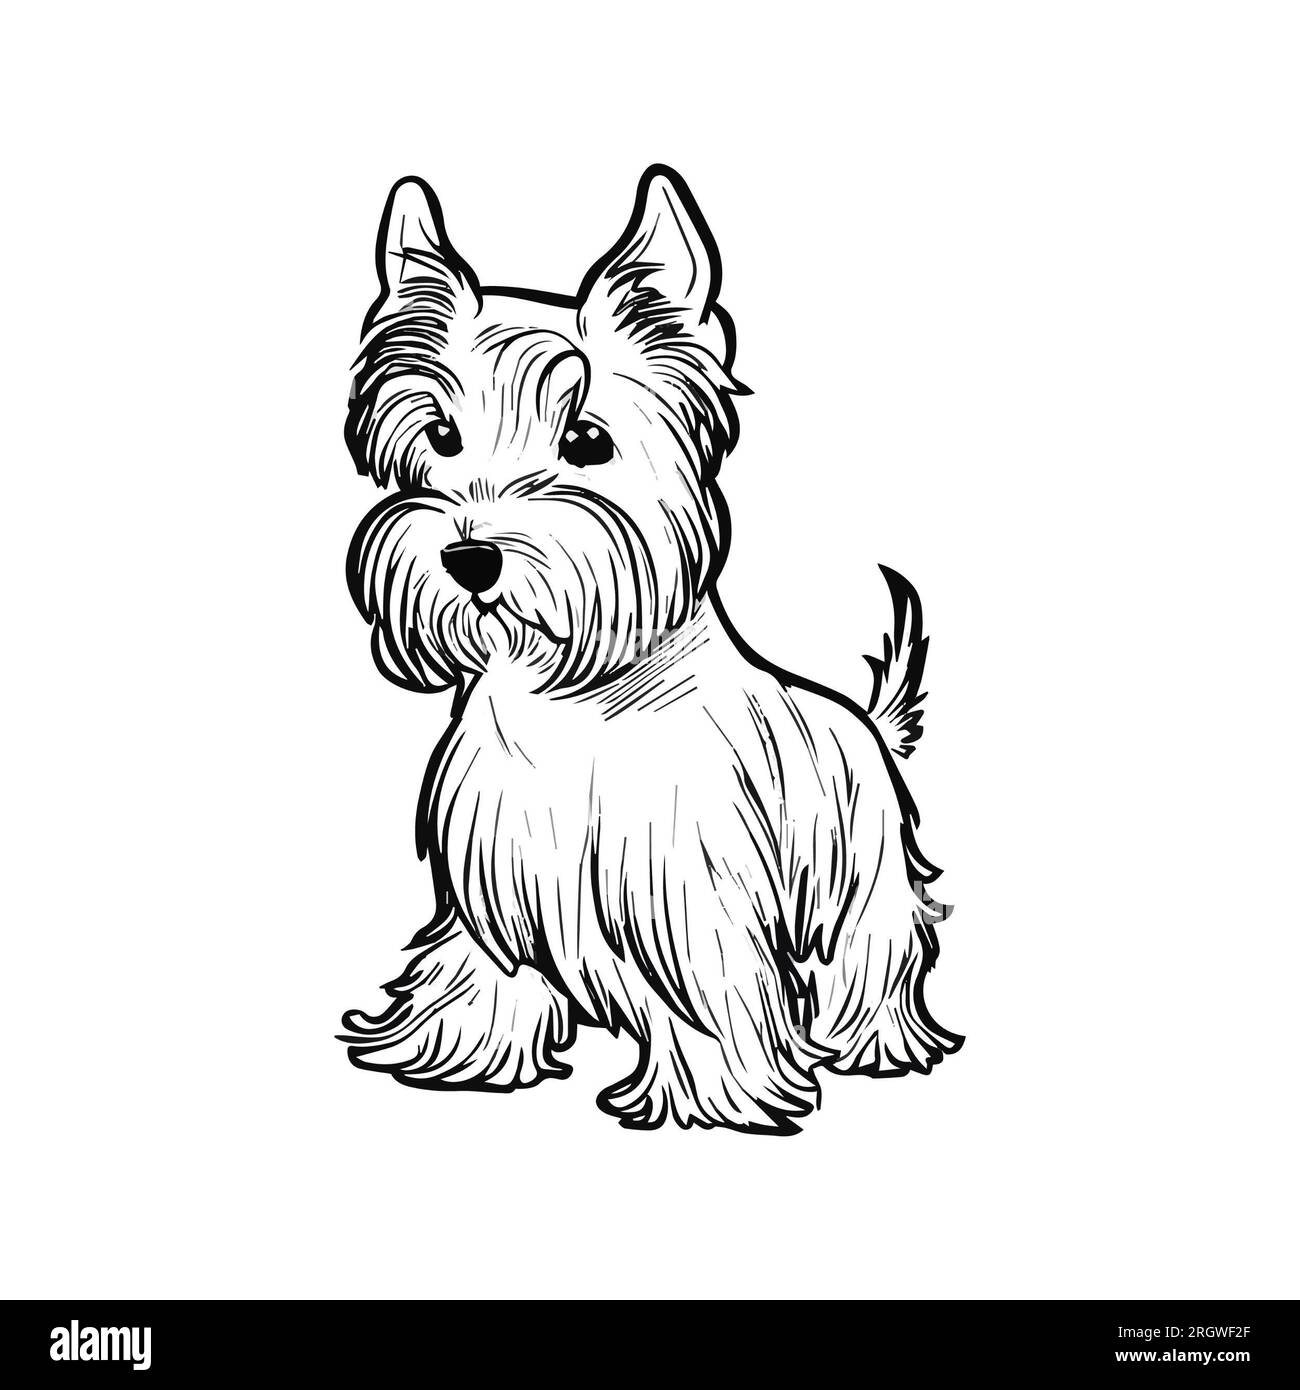 puppy black and white clip art